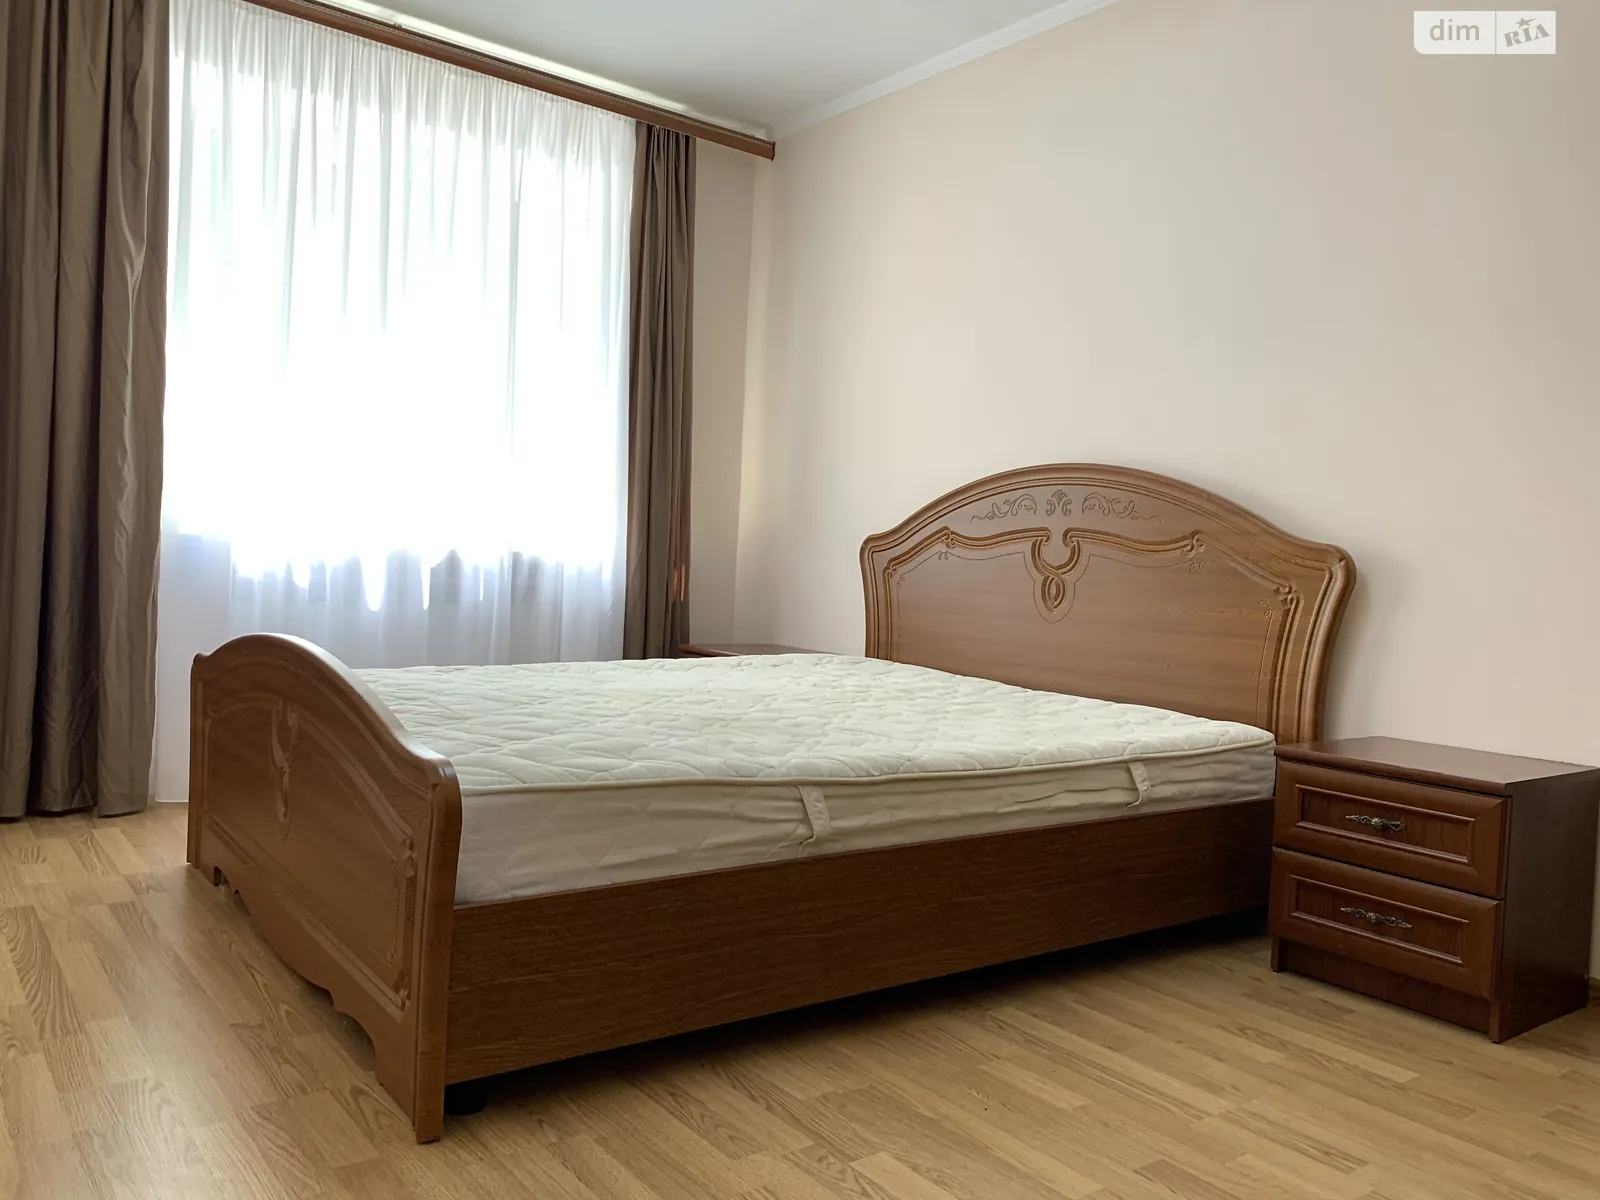 2-кімнатна квартира 51.2 кв. м у Тернополі, цена: 46000 $ - фото 1